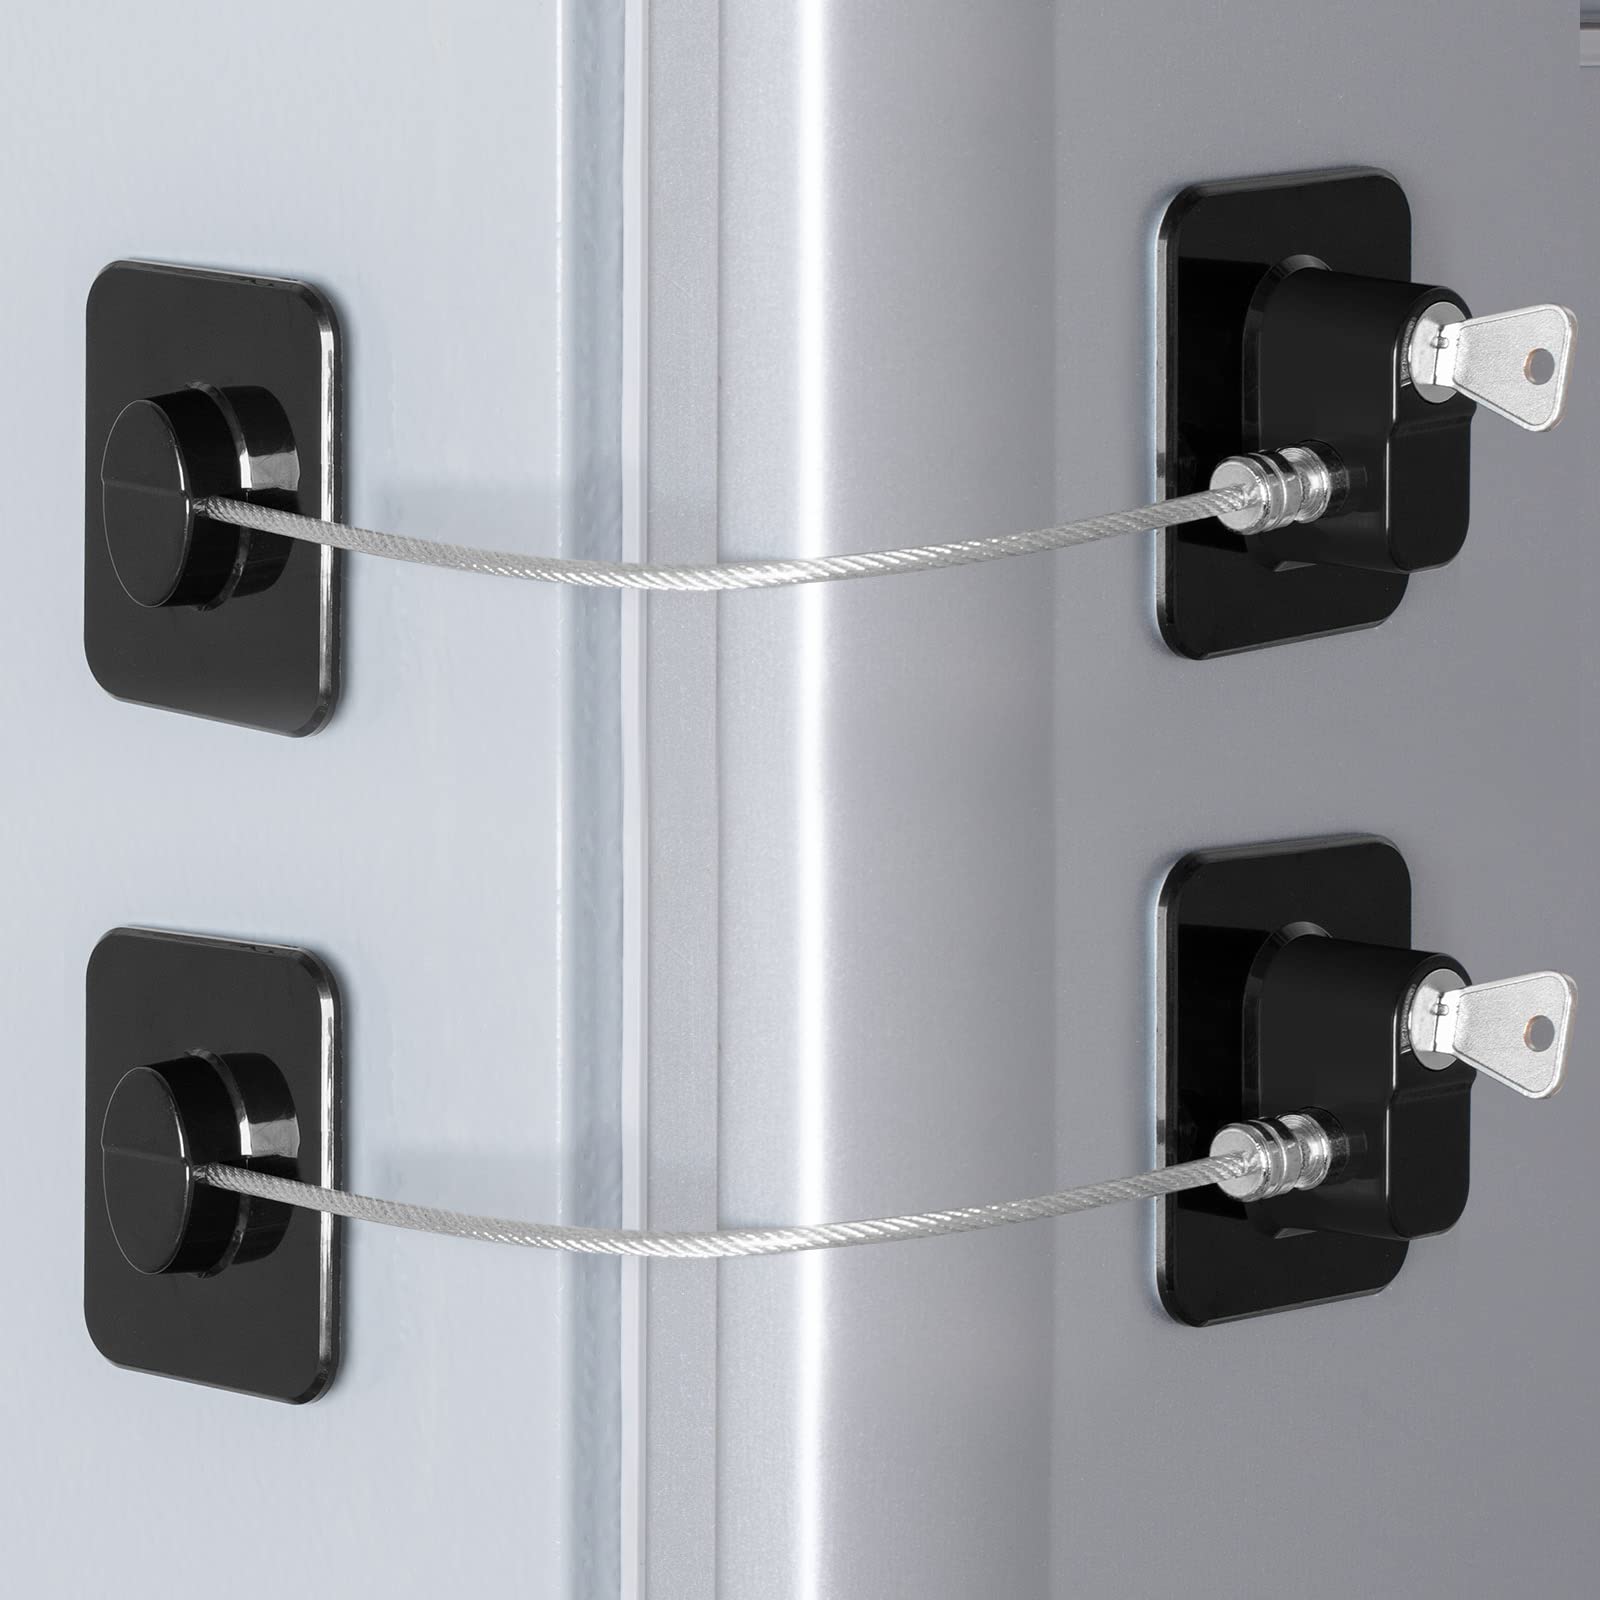 2 Pcs Fridge Lock, Refrigerator Lock for Children, Freezer Lock, Child  Safety Cabinet Lock with Adhesive,Used in Refrigerator Door, Cabinets,  Drawers, Toilet Seat